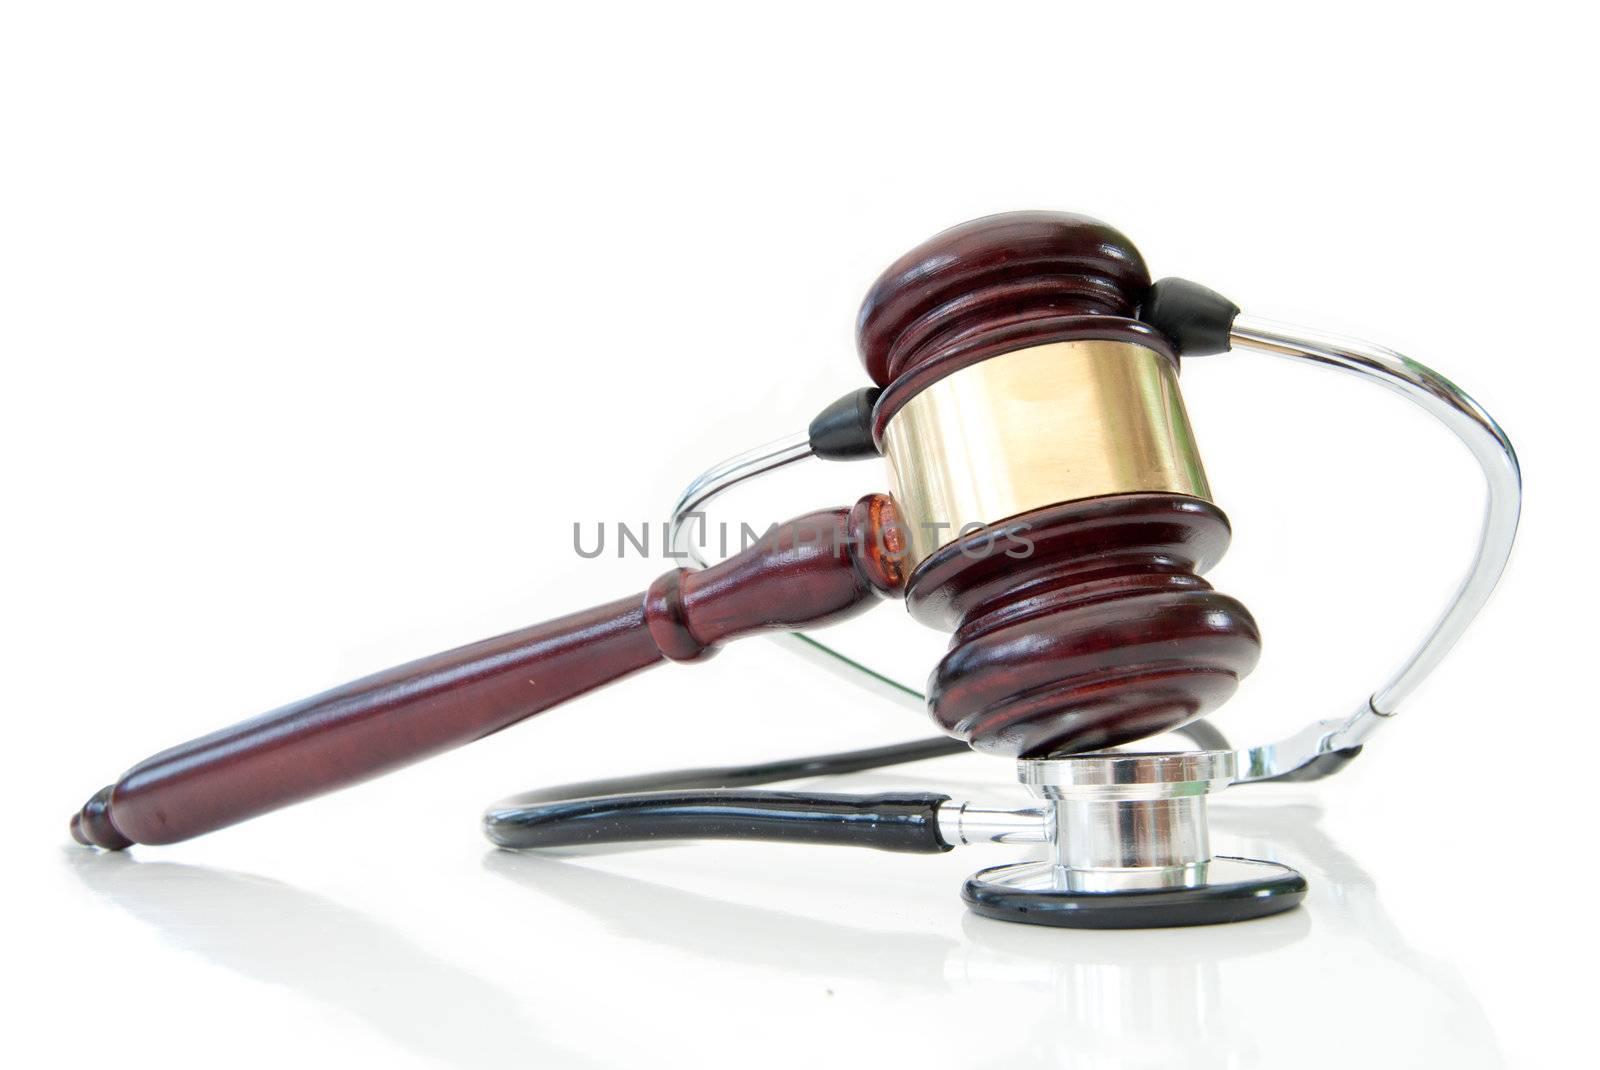 Stethoscope and judges gavel by unikpix